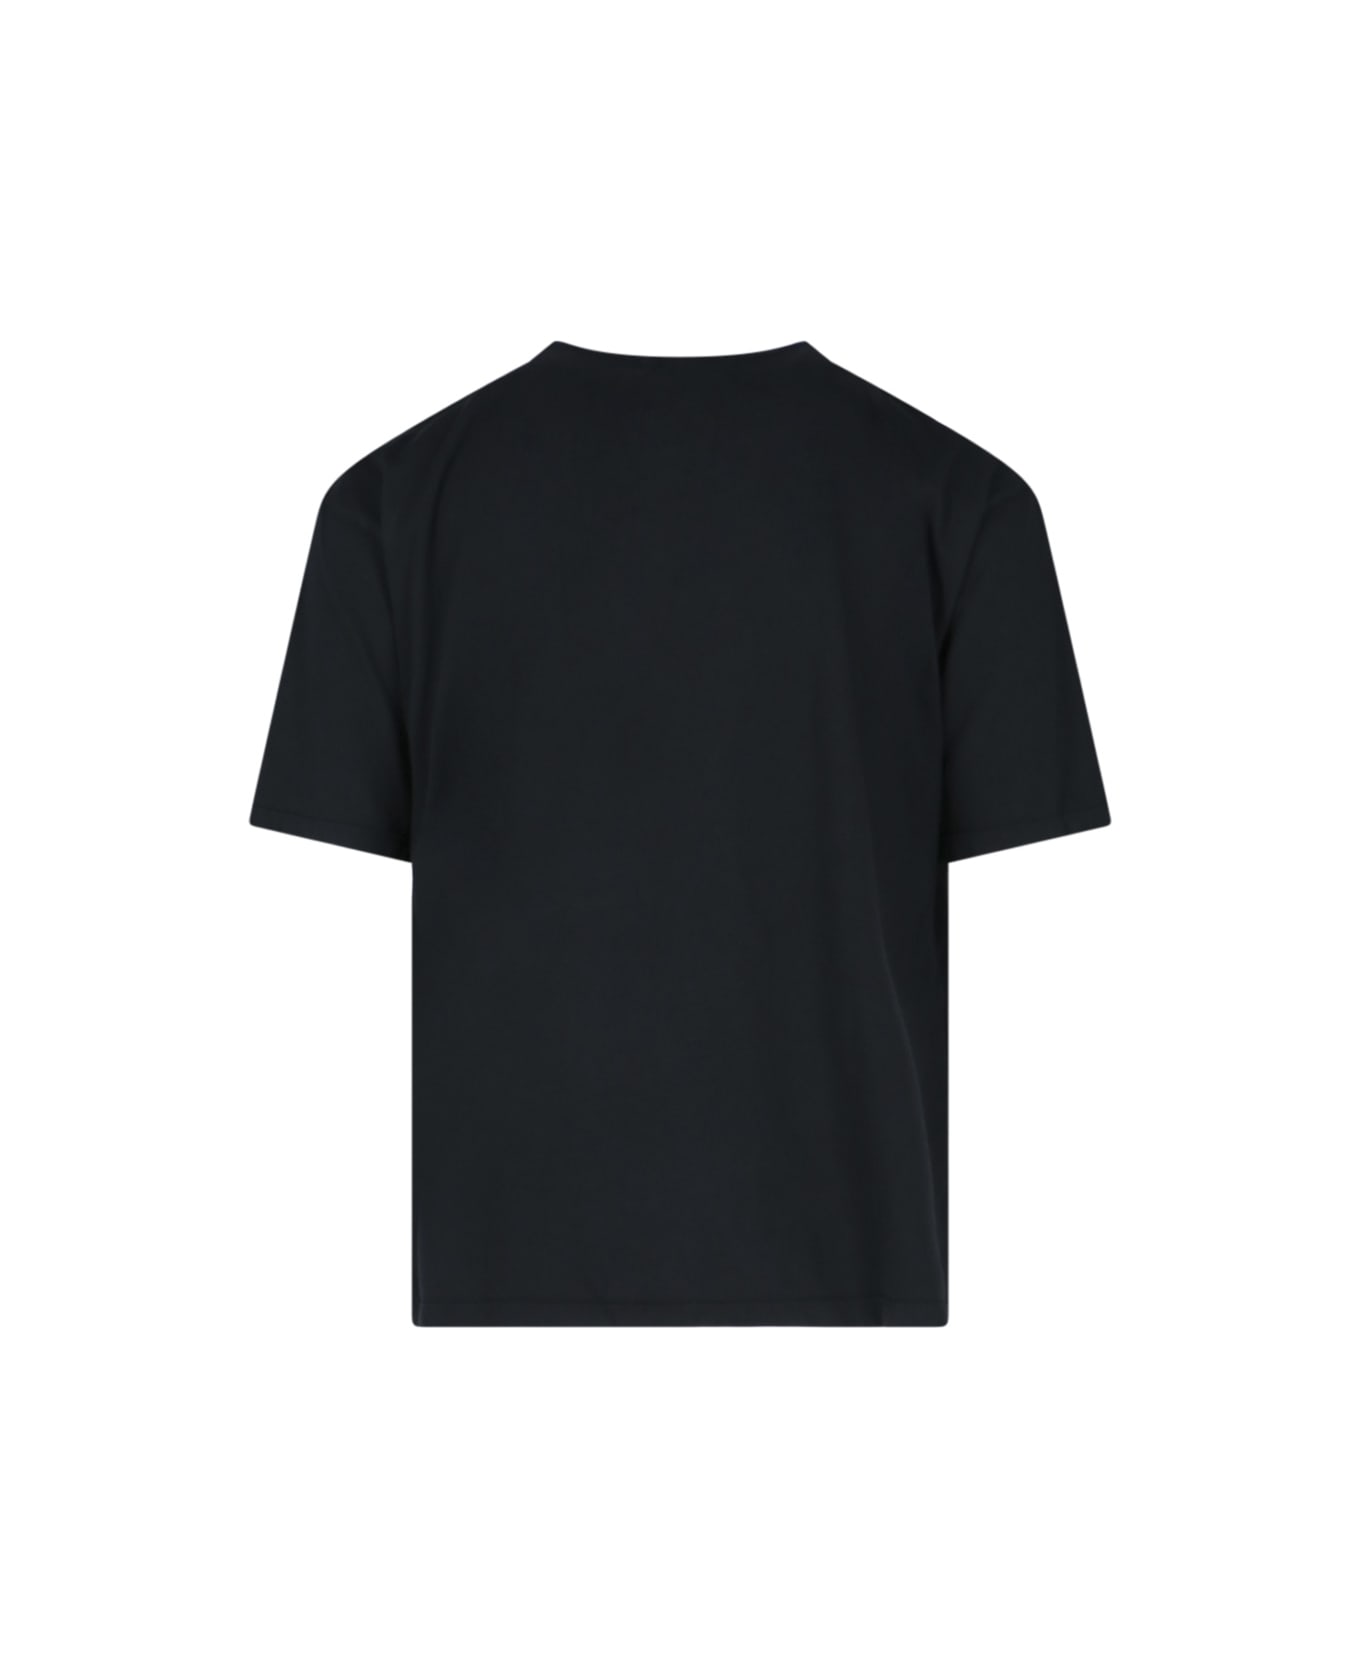 Rhude 'beach Bum' T-shirt - Black  